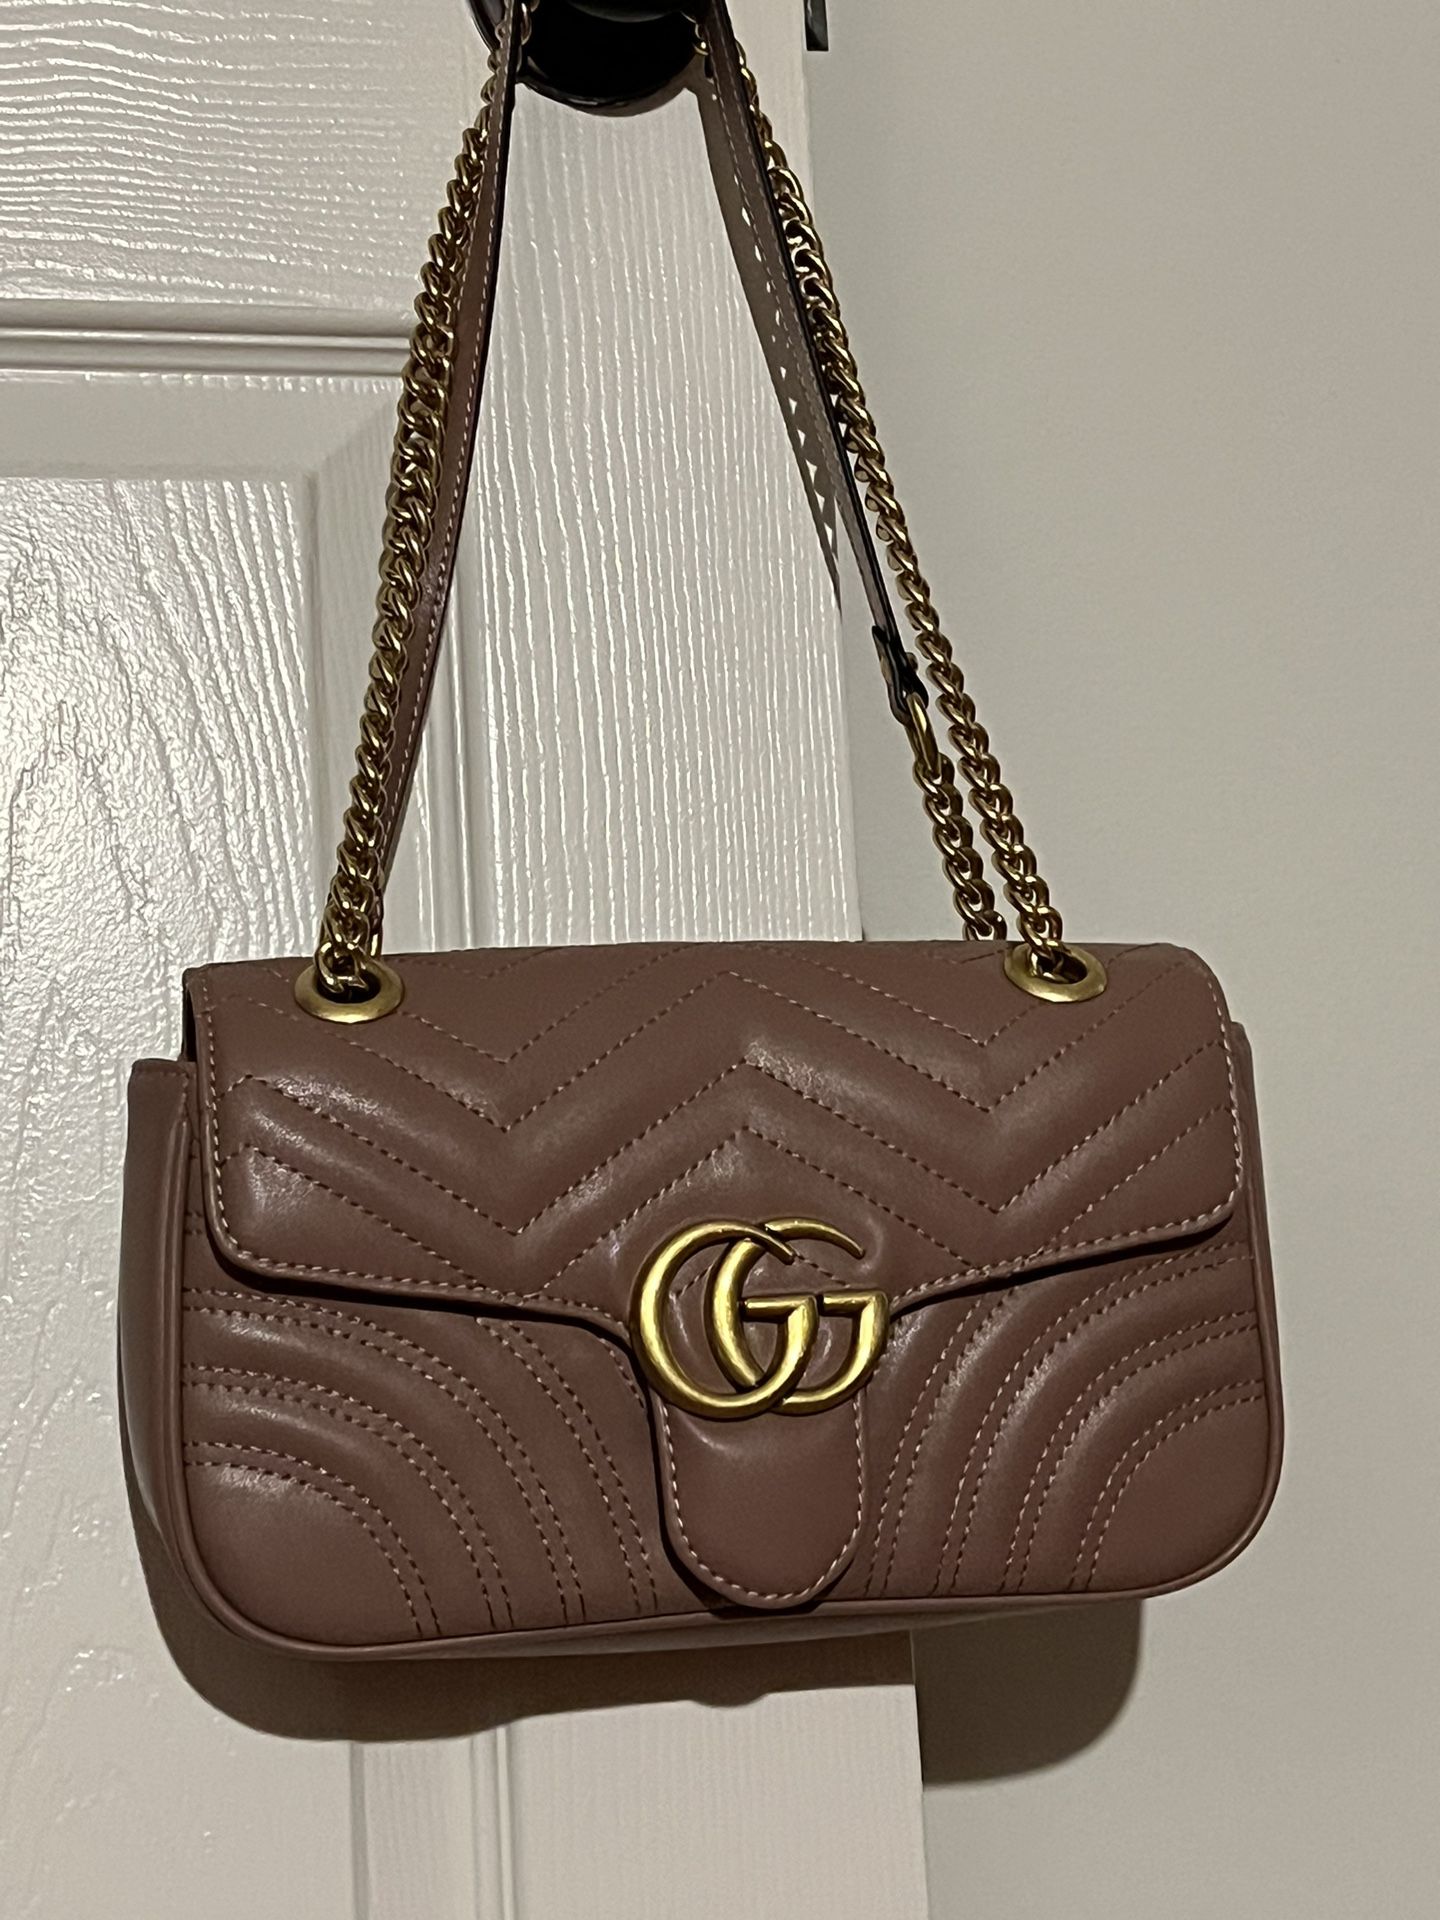 Gucci Womens Handbag